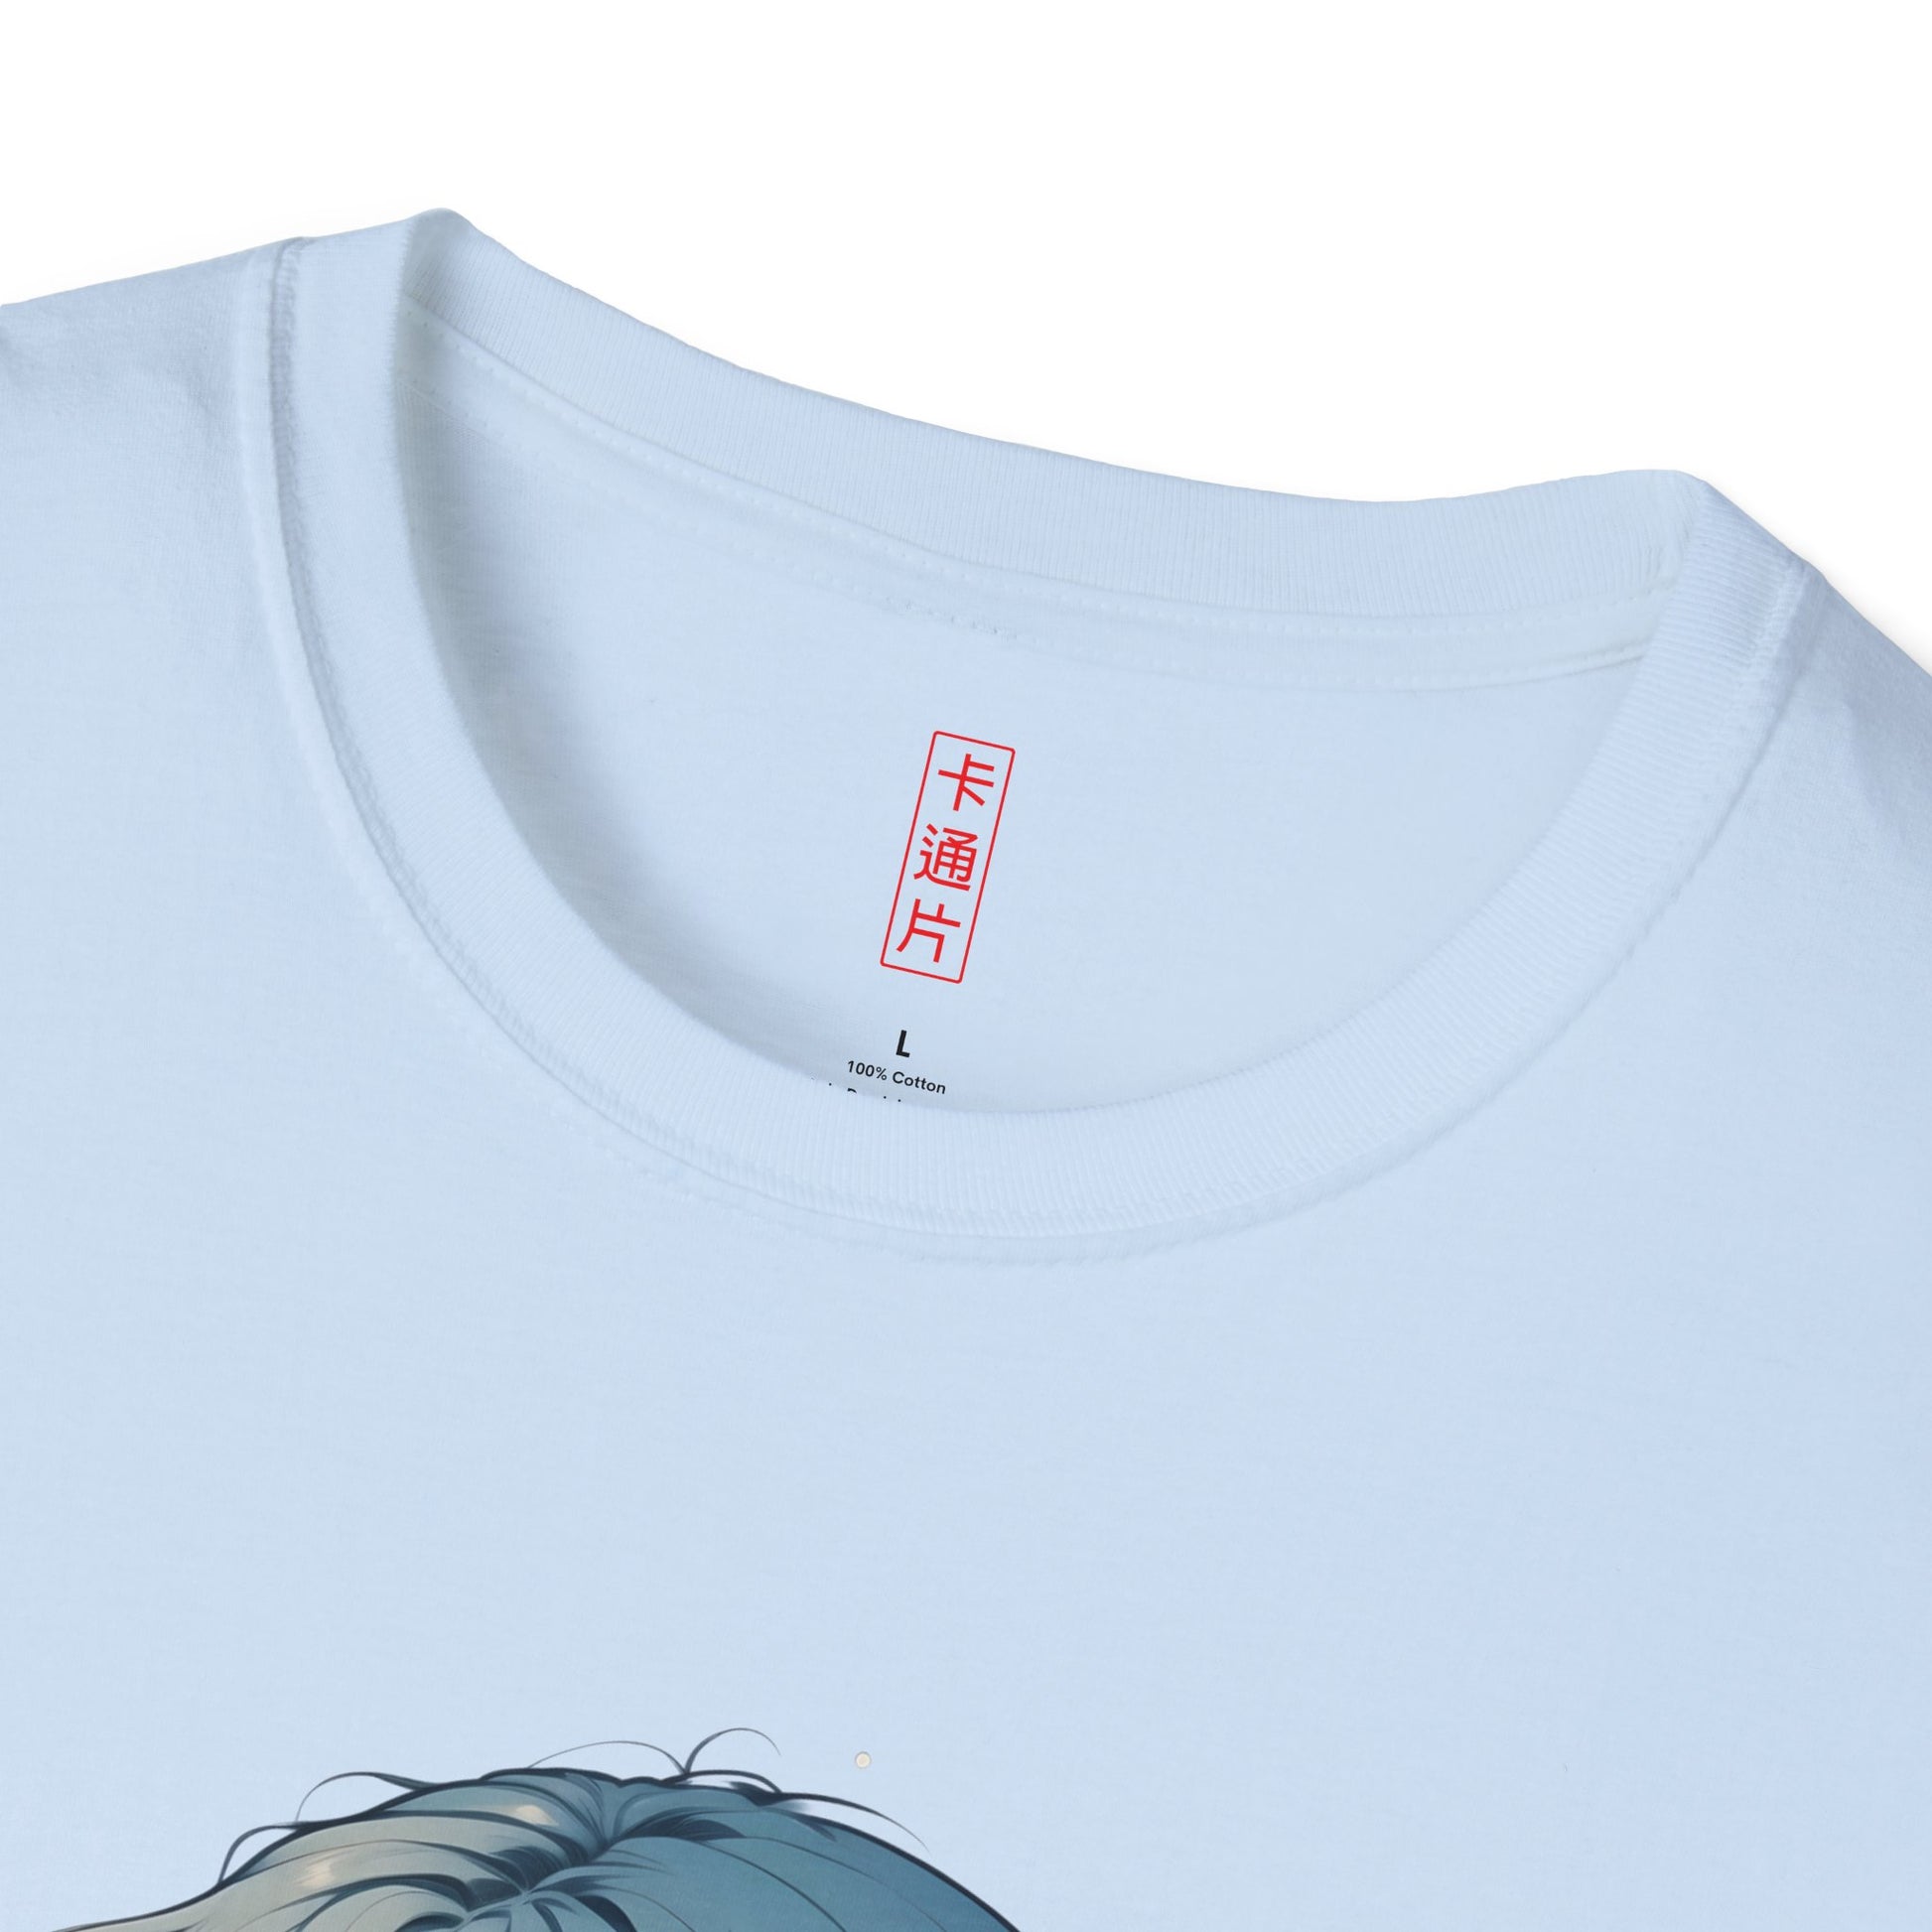 Kǎtōng Piàn - California Love Collection - 006 - Unisex Softstyle T-Shirt Printify